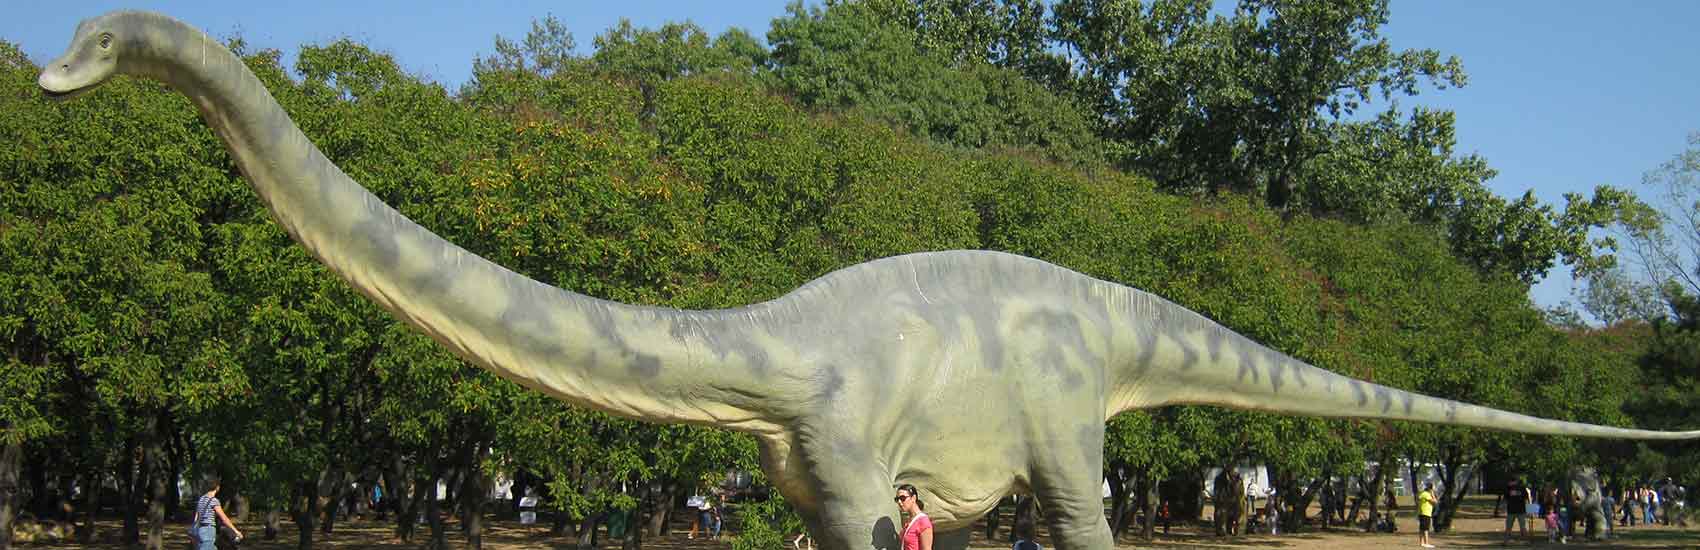 dinosaures parc